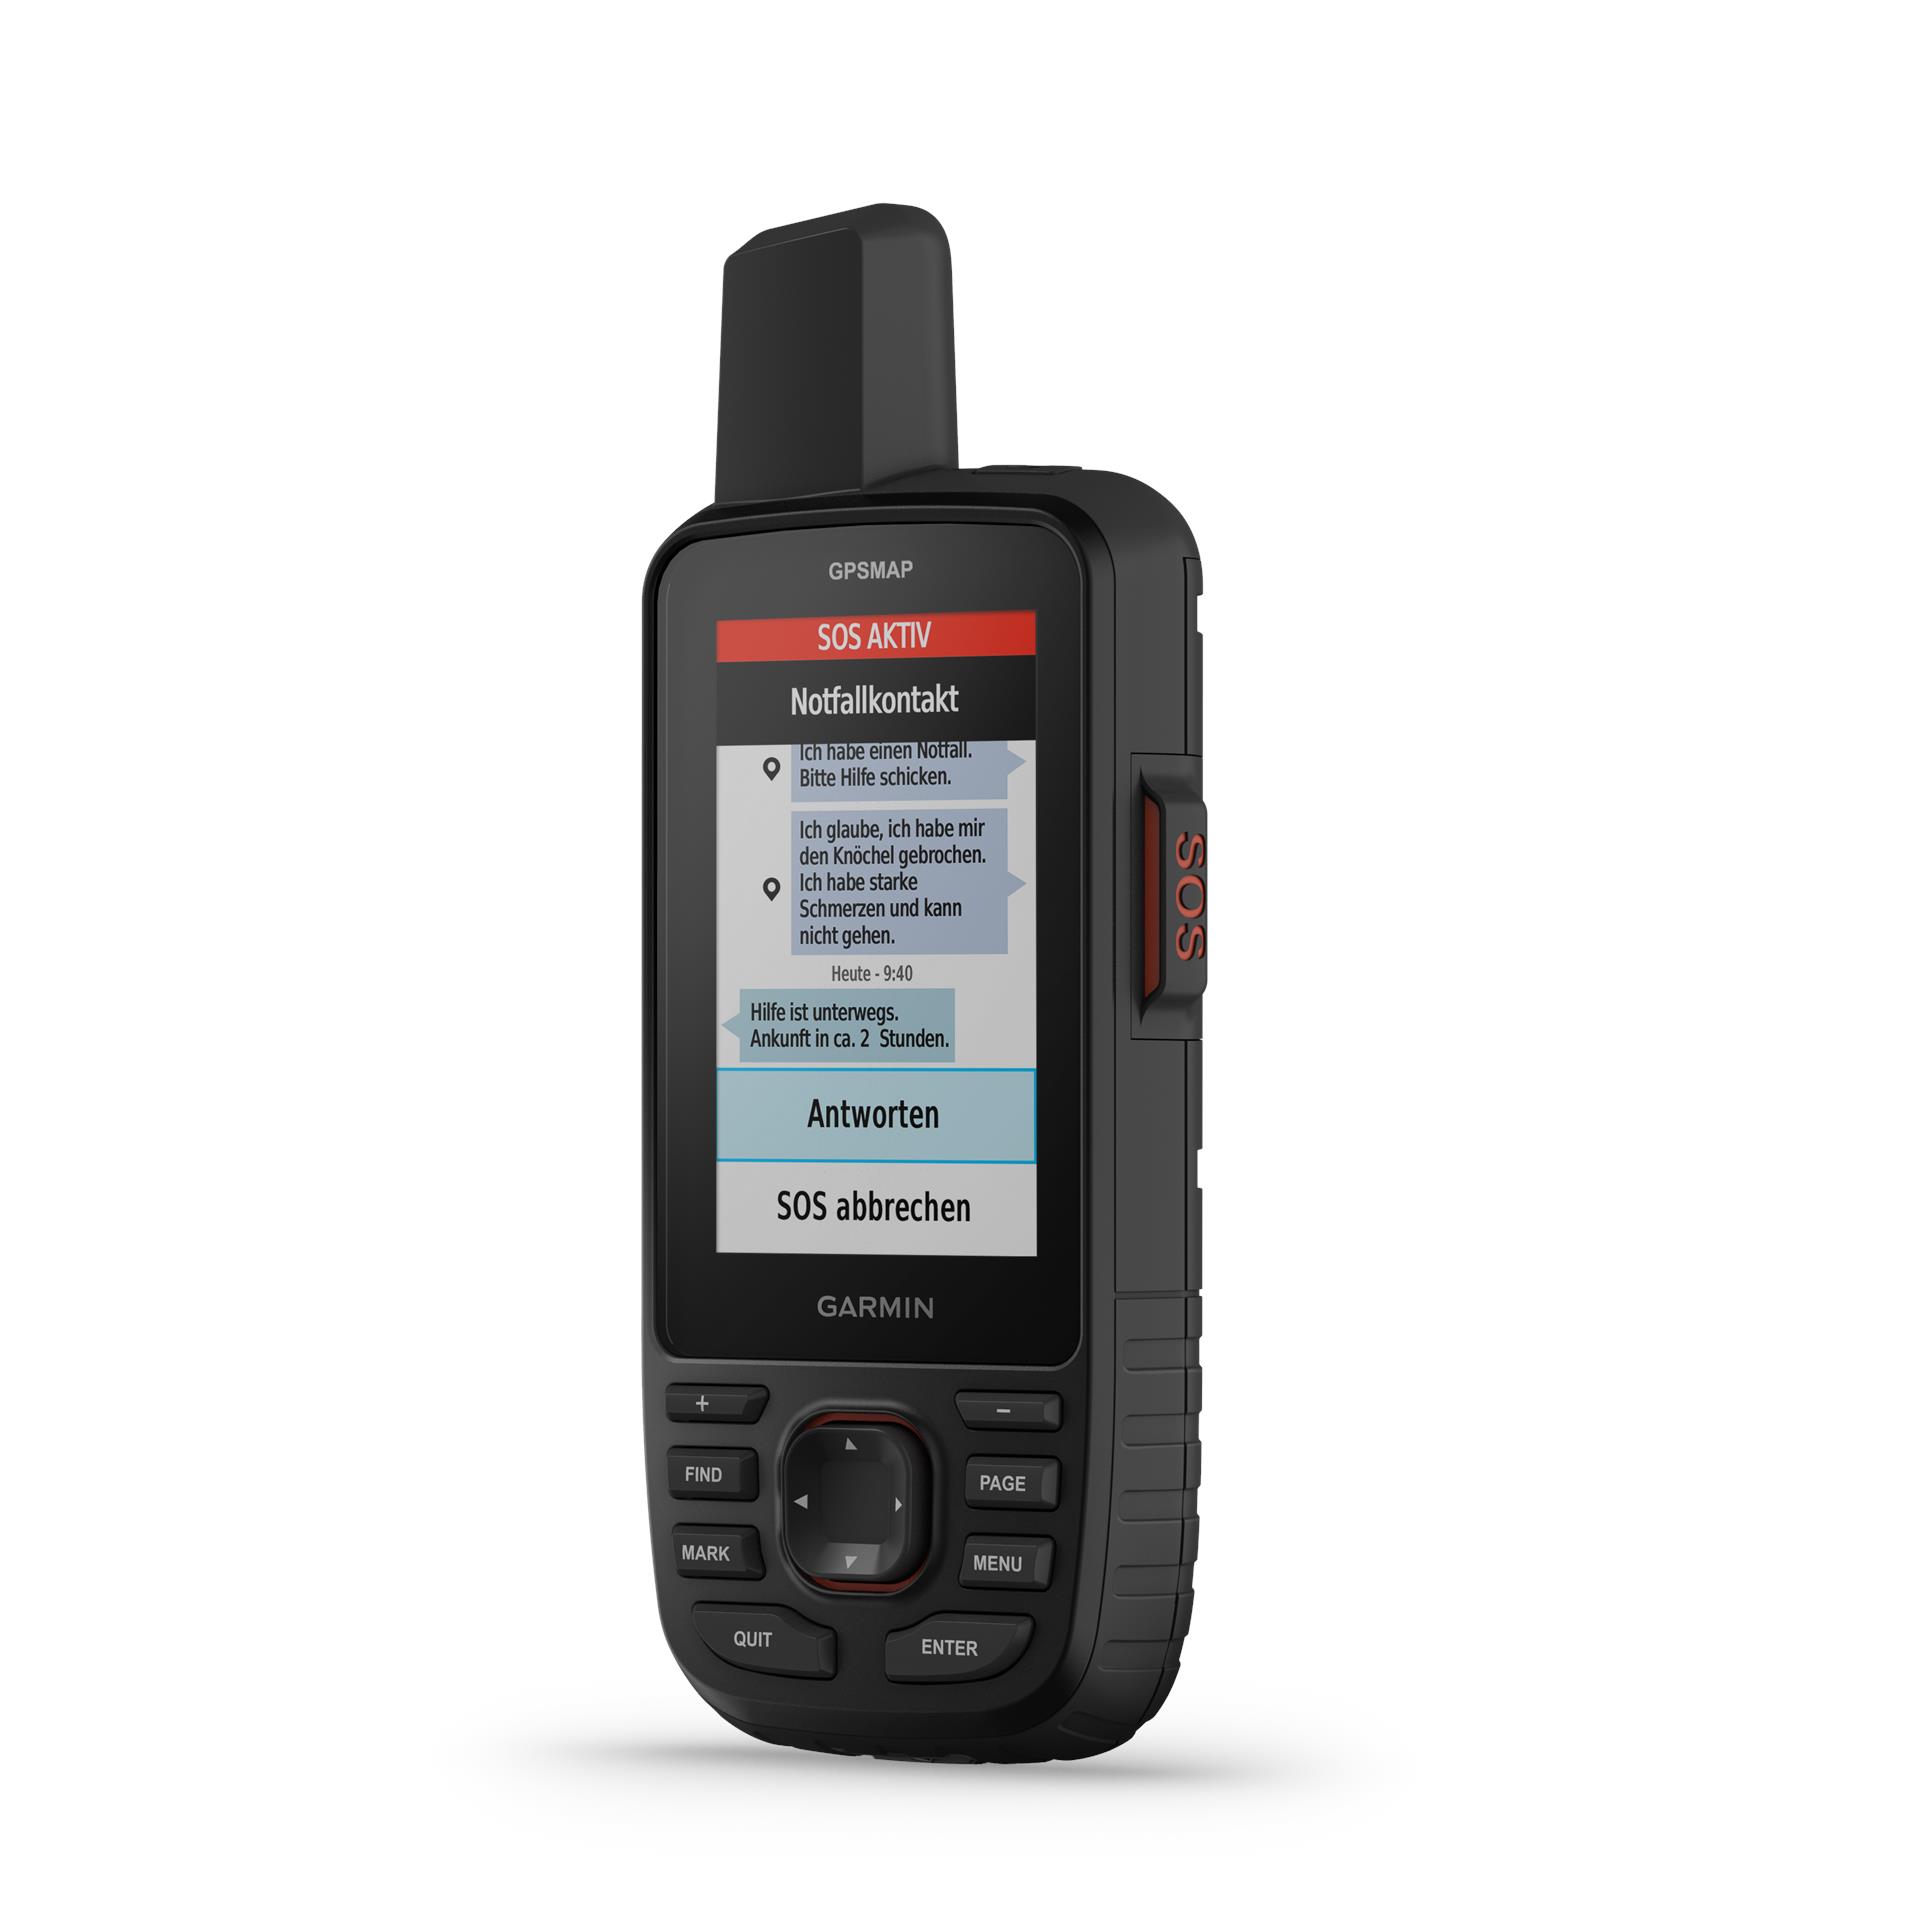 Garmin GPSMAP 67i EU GPS satellite communicator